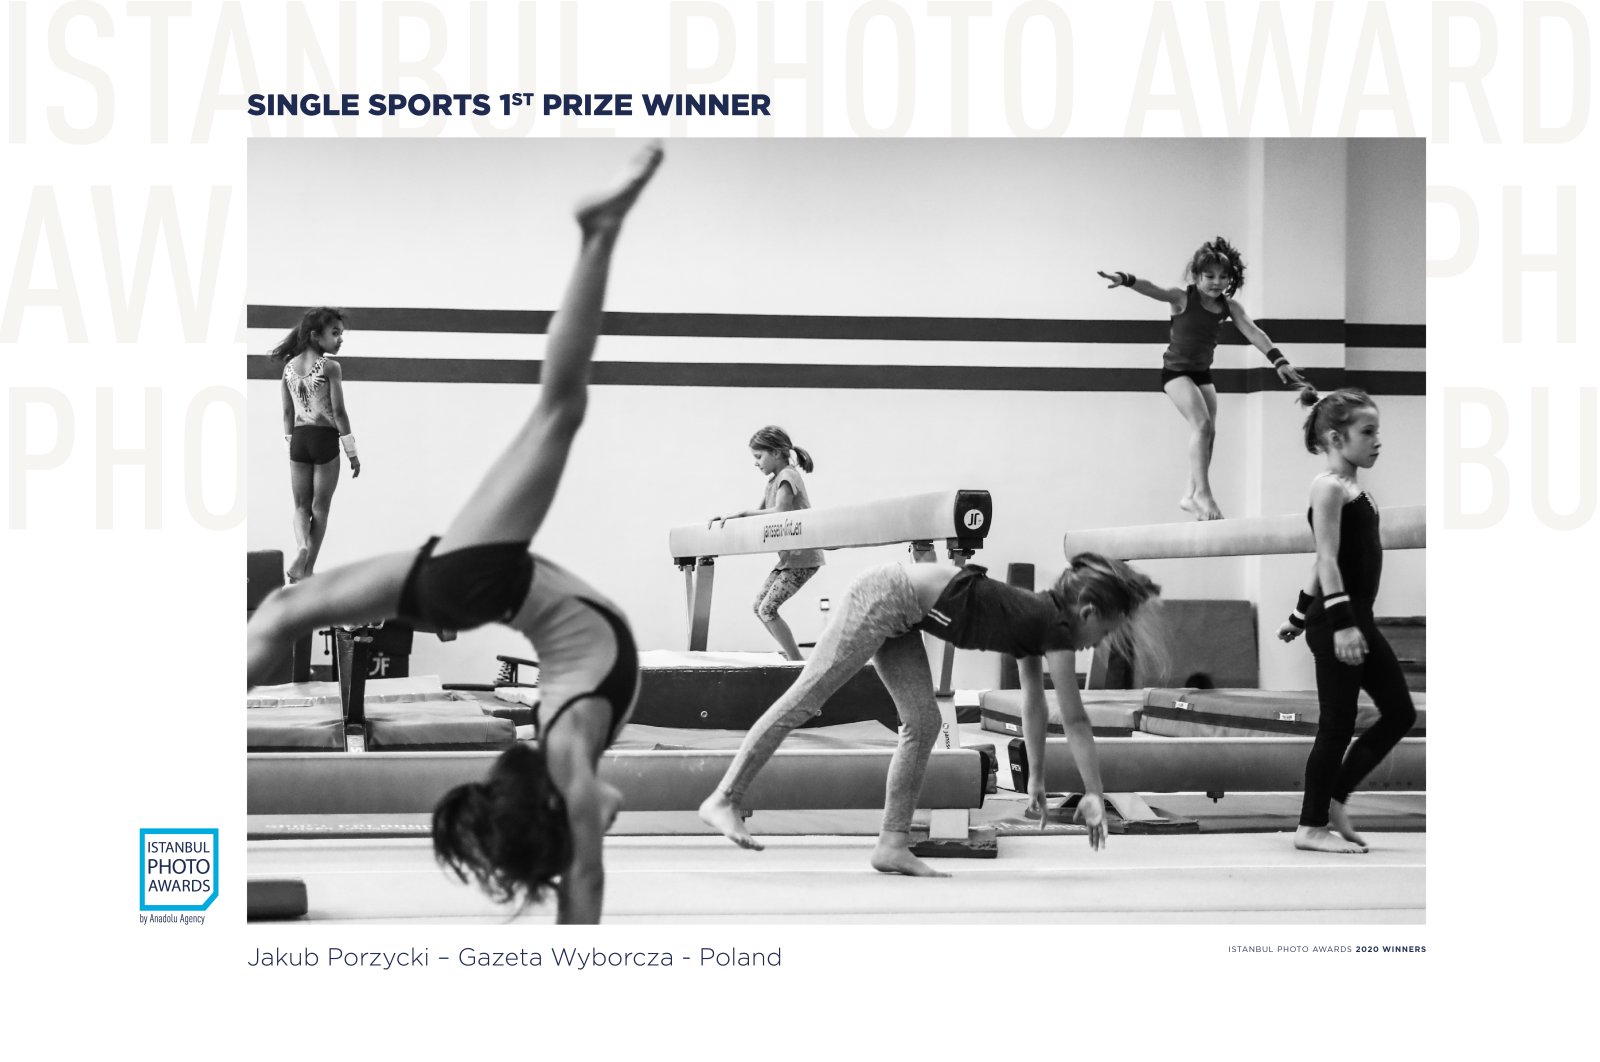 Jakub Porzycki was awarded first prize in the Single Sports category for his photo titled "Gymnastics." (AA Photo)